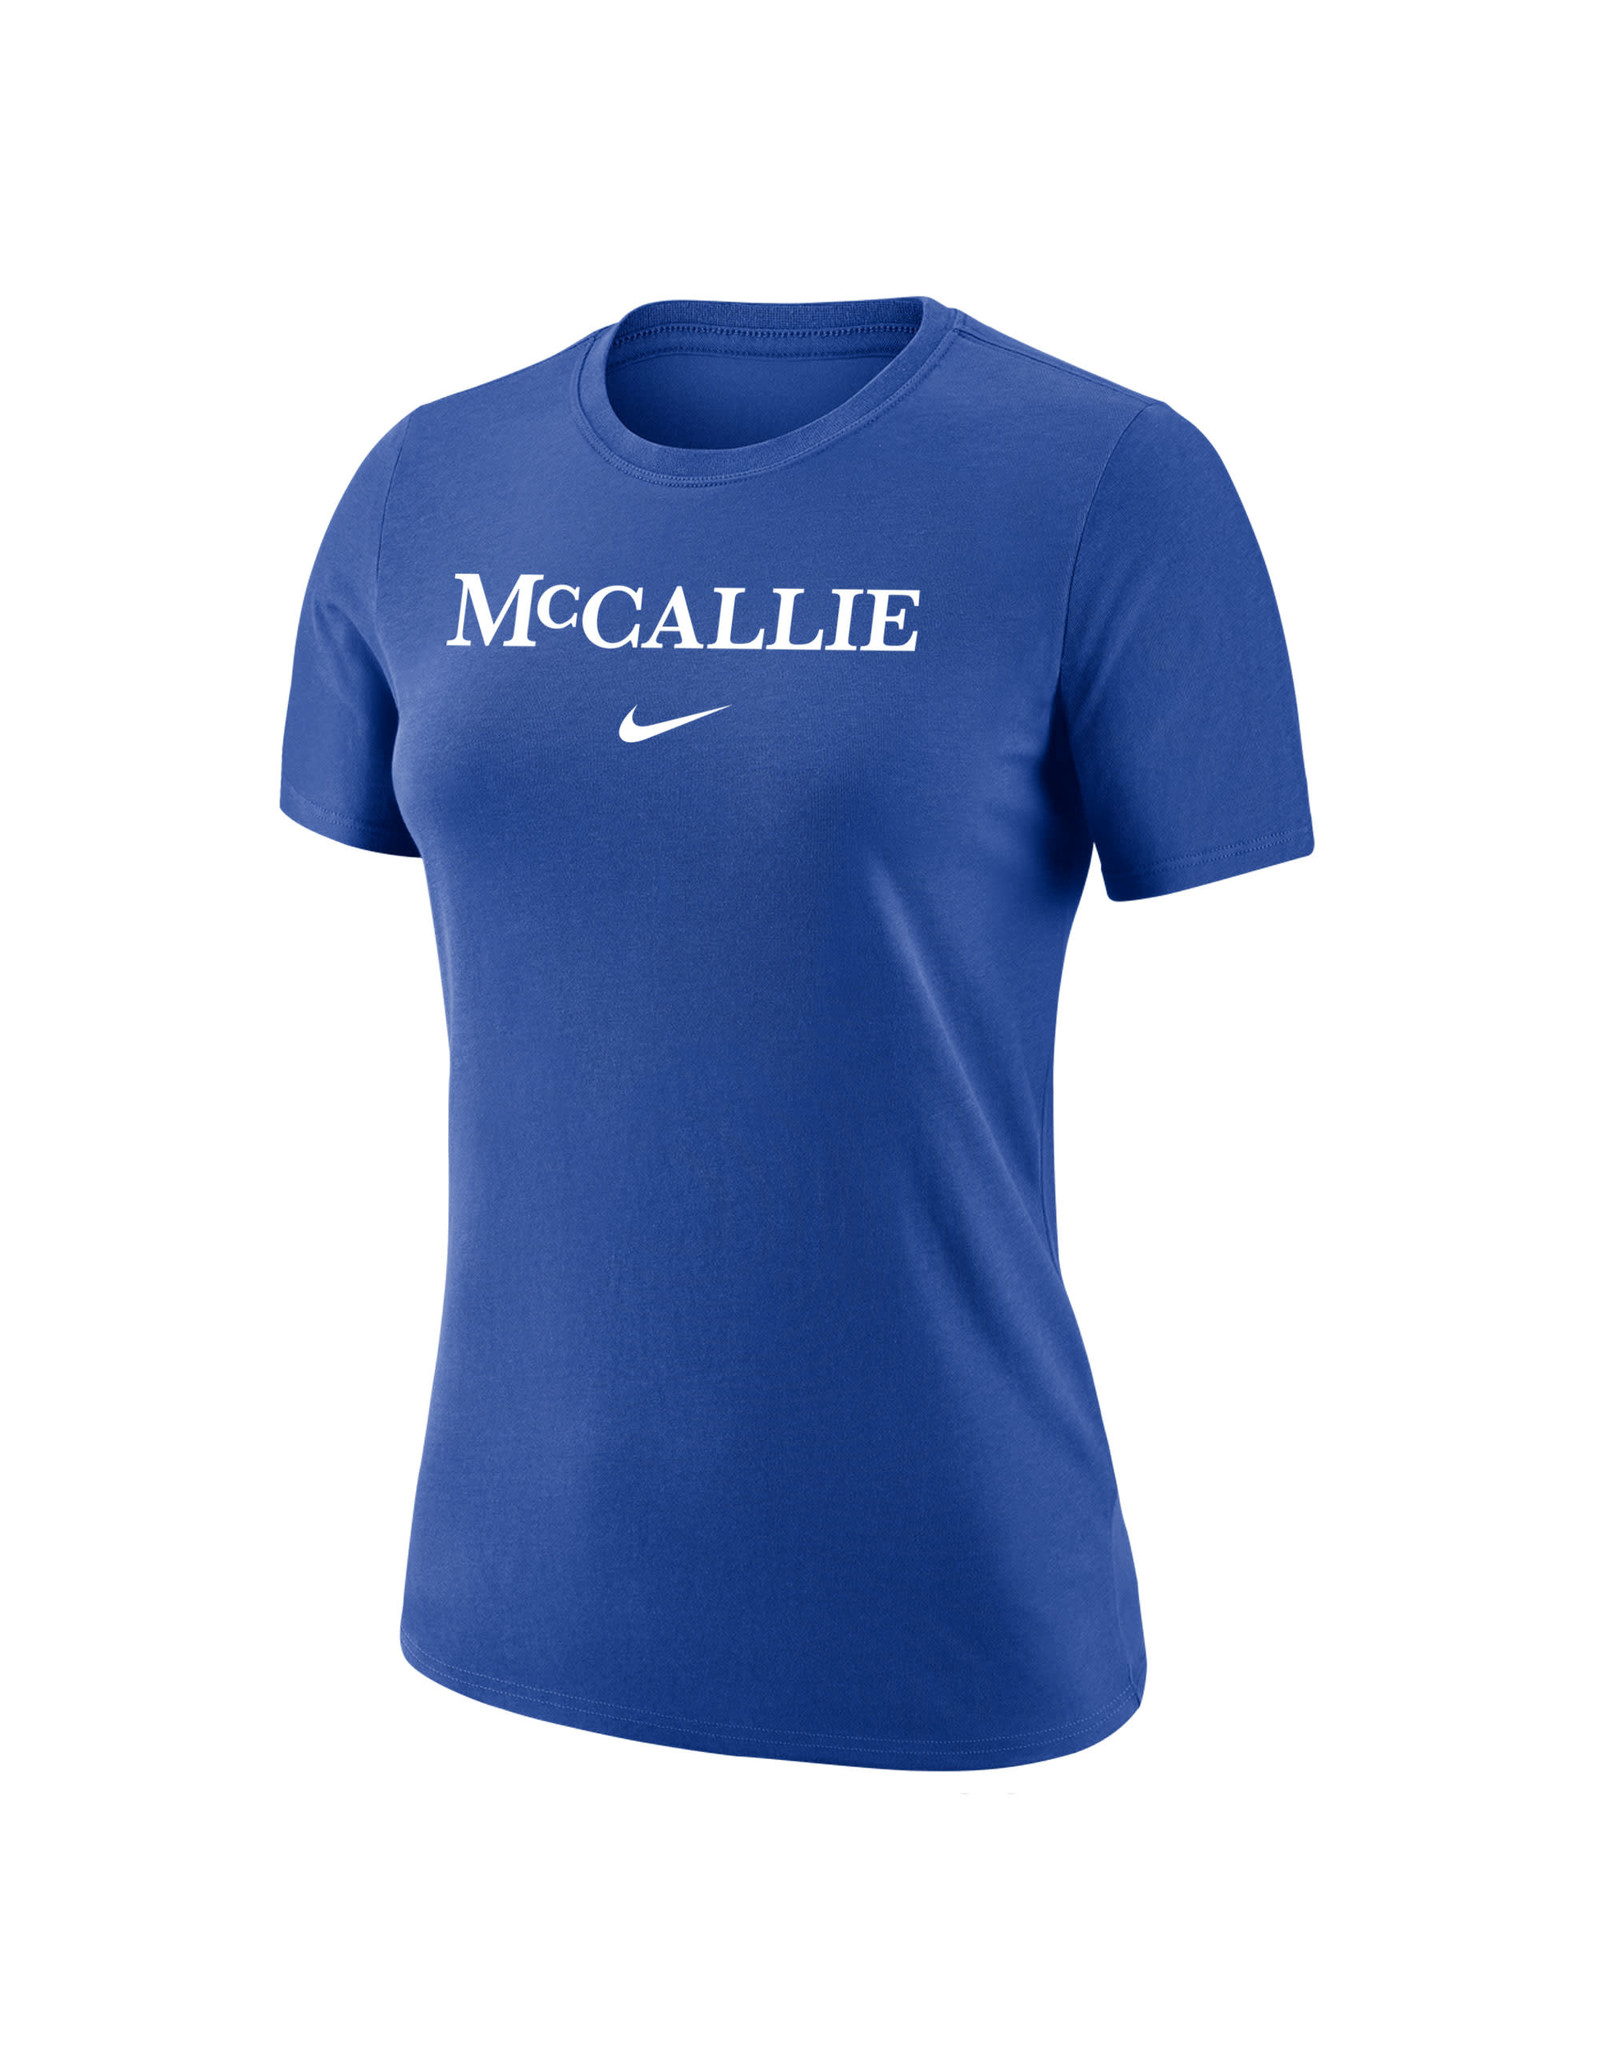 NIKE Women's Nike Dri Fit Royal McCallie